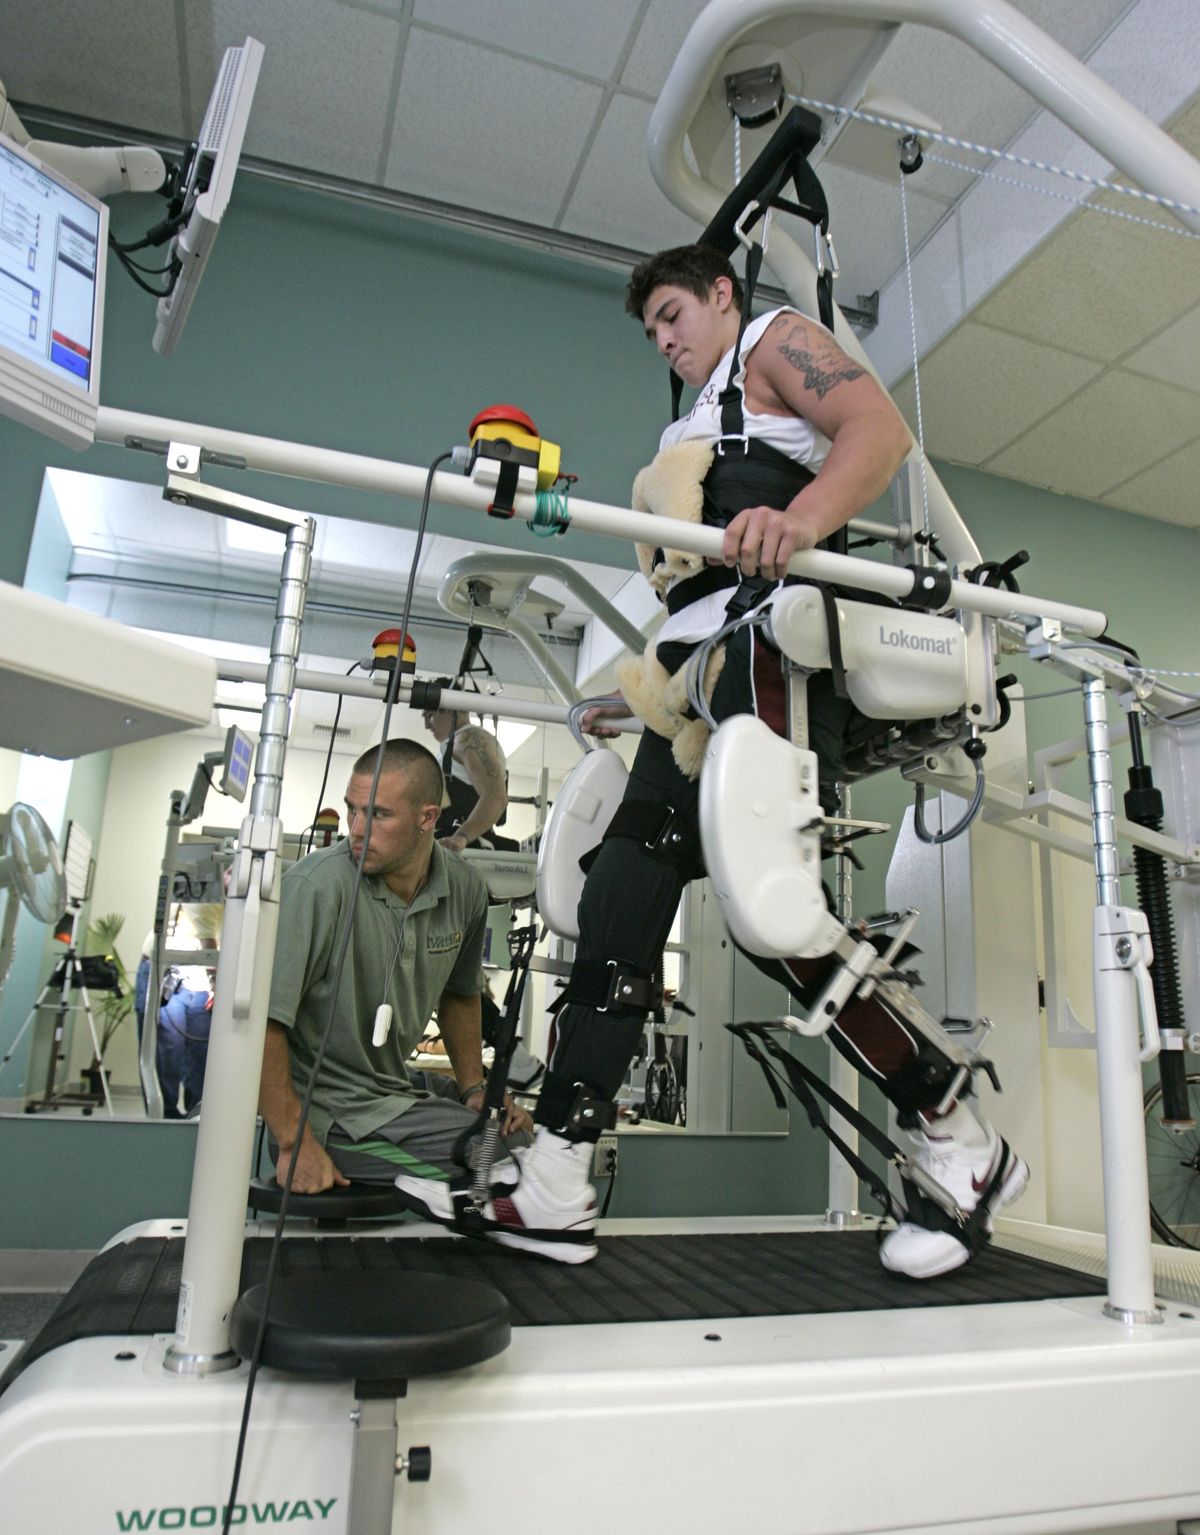 Cory Mackay uses the Lokomat, which walks his paralyzed legs as therapist Ben Lovelace monitors. Seattle Times (Jim Bates Seattle Times / The Spokesman-Review)